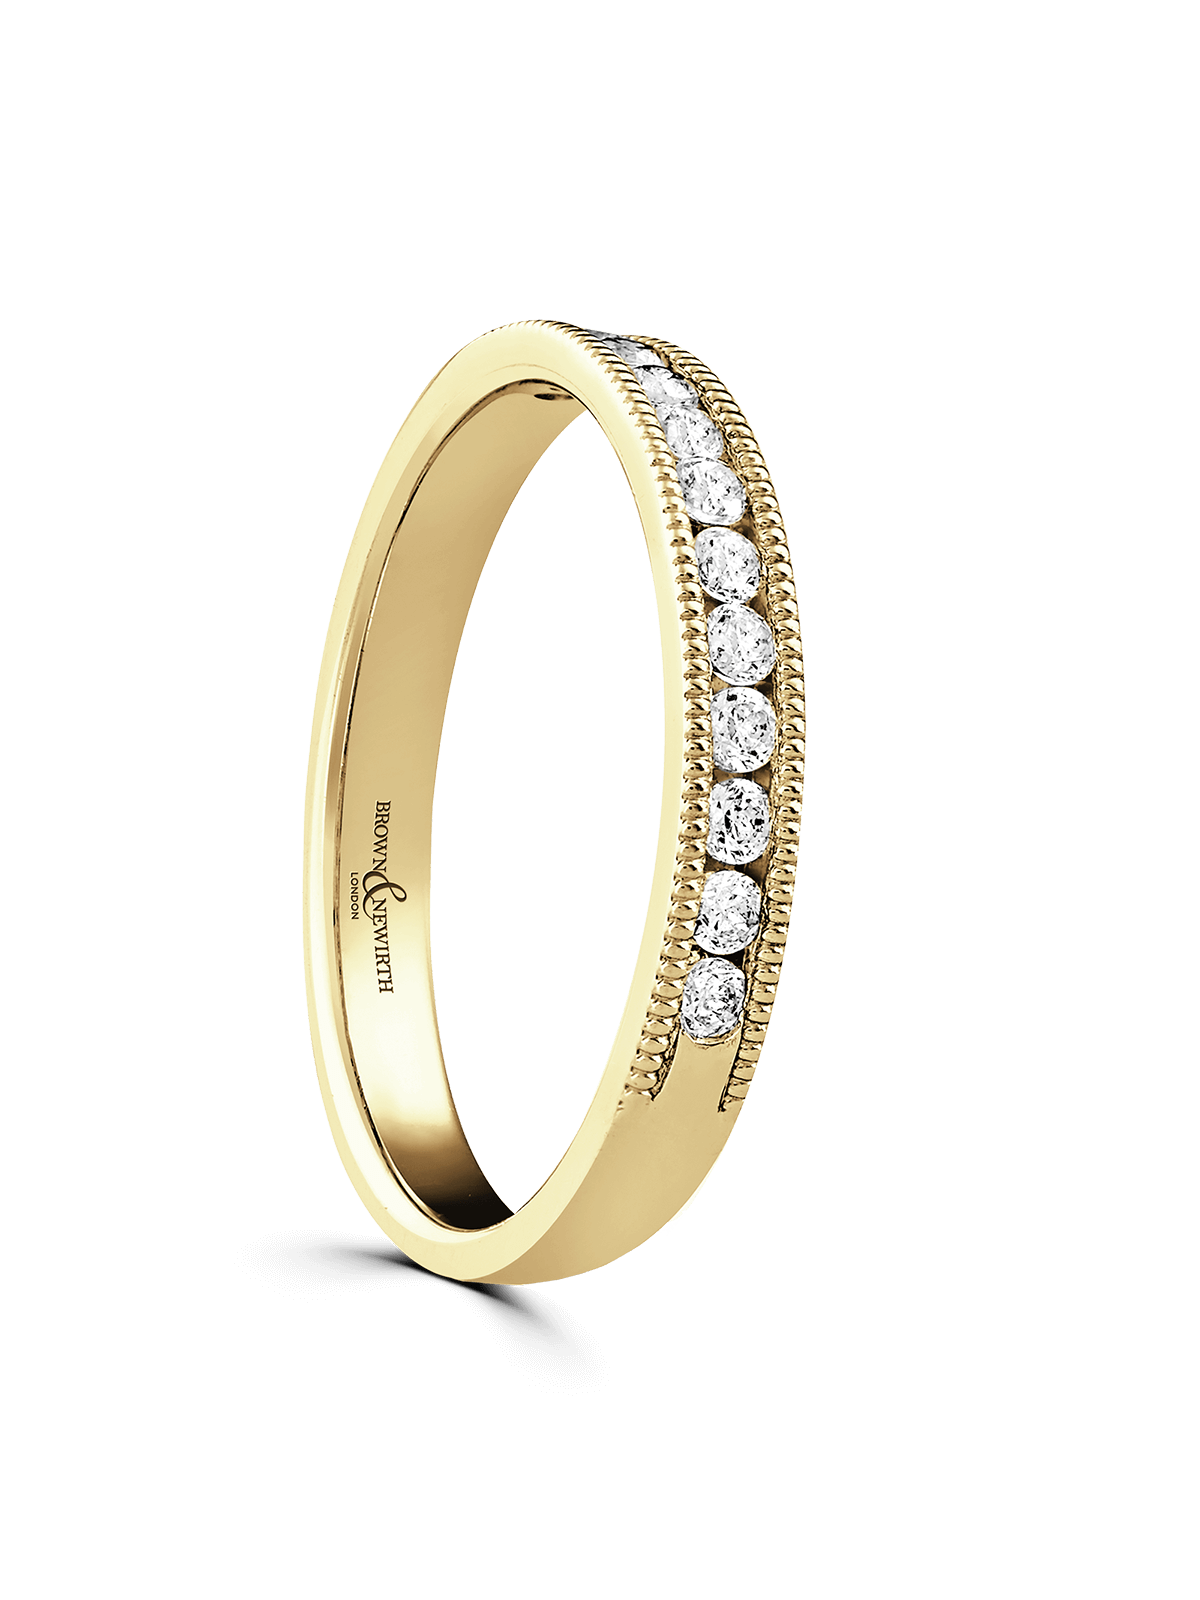 Brown & Newirth Everlasting 0.20ct Brilliant Cut Diamond Wedding Ring in 18ct Yellow Gold